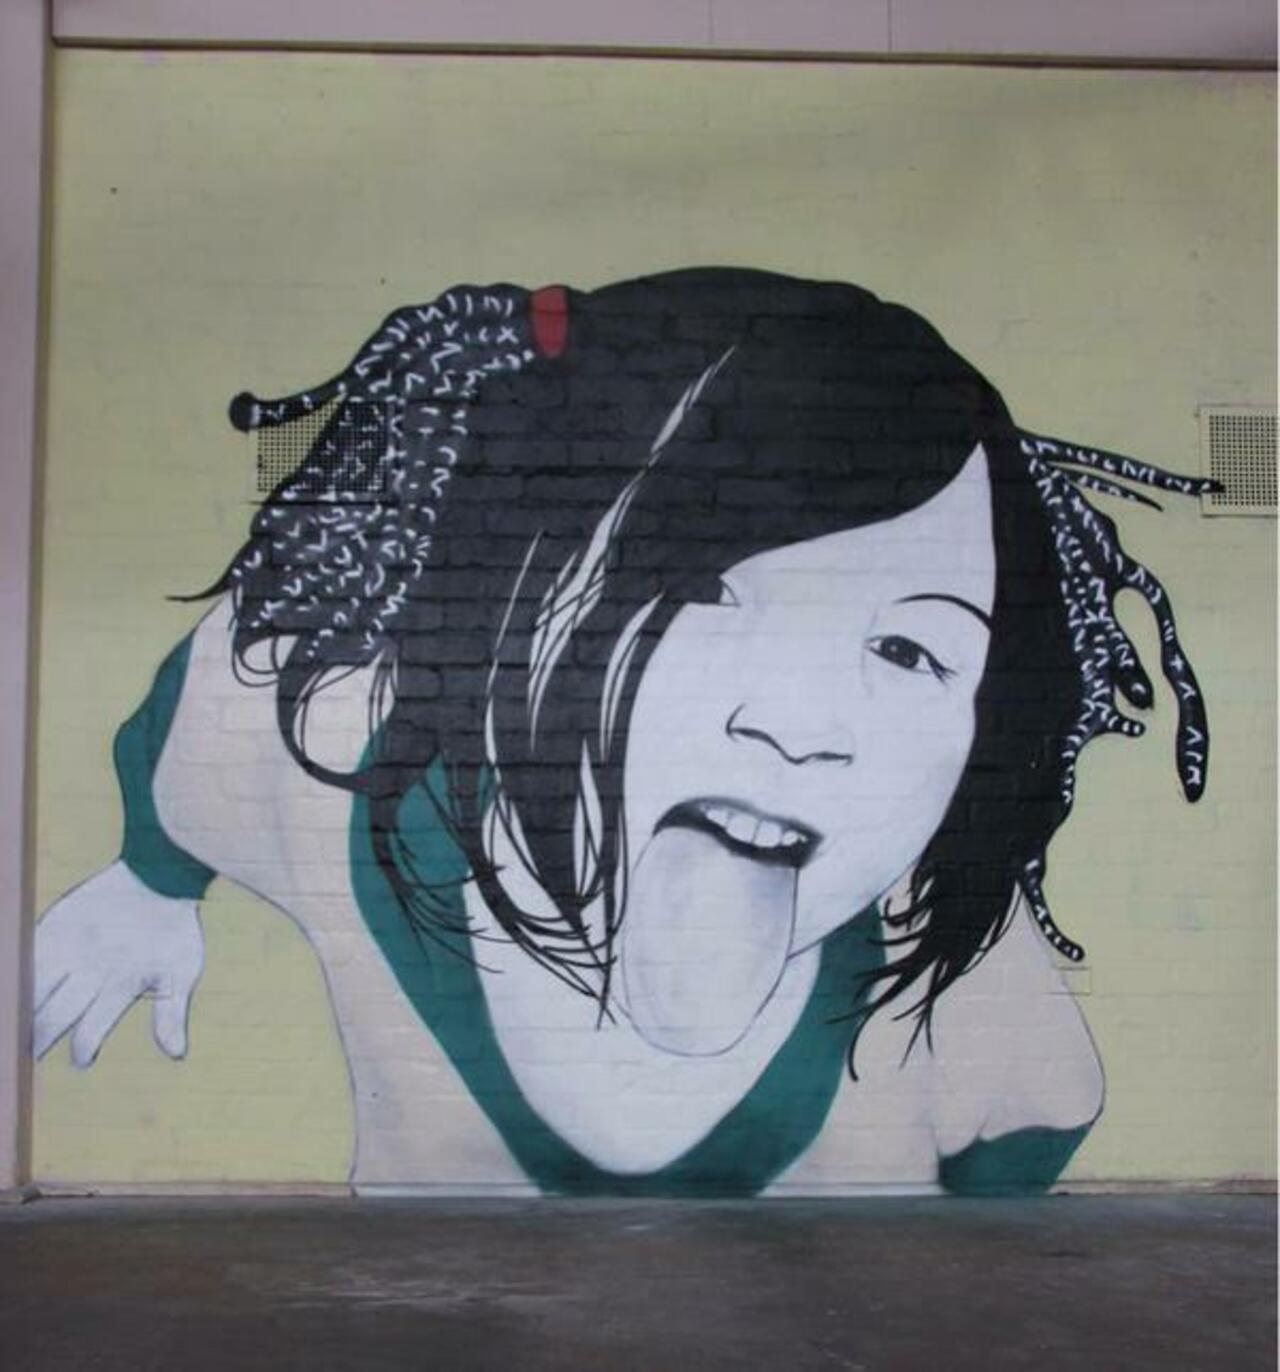 Street Art by the artist 'Be Free'

#art #arte #graffiti #streetart http://t.co/hb2ZQmnm7B